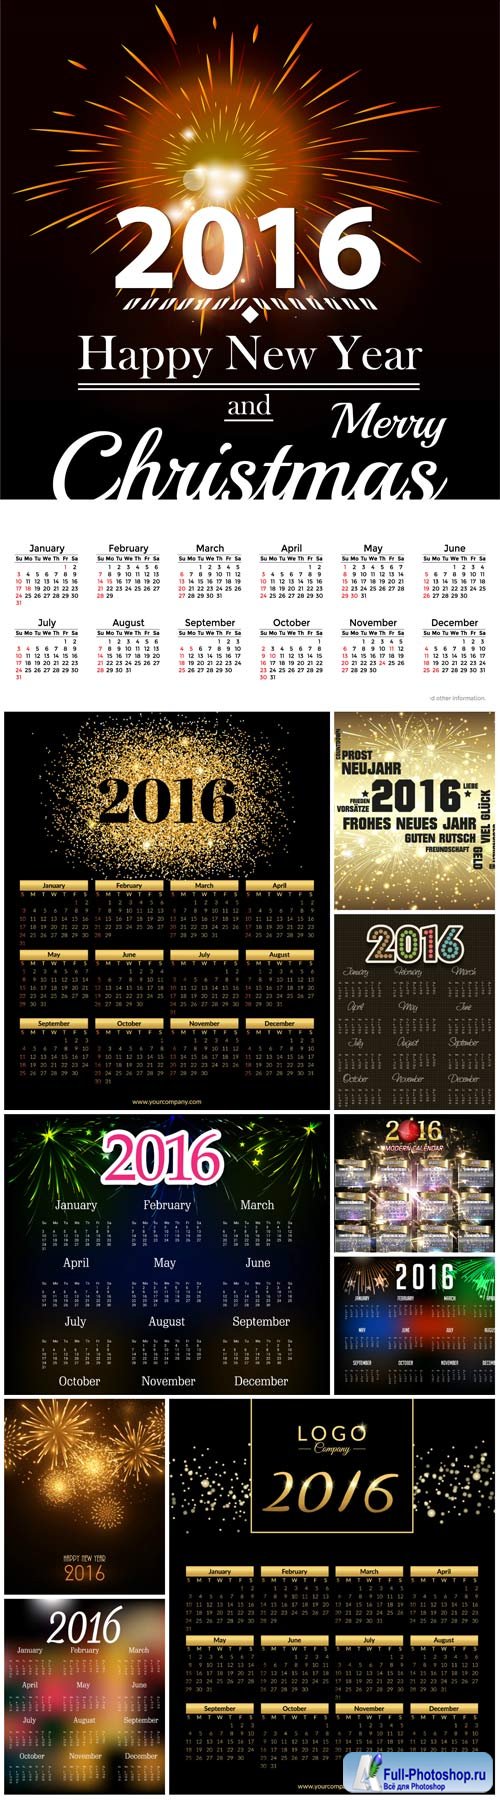 Calendar 2016 on a black background